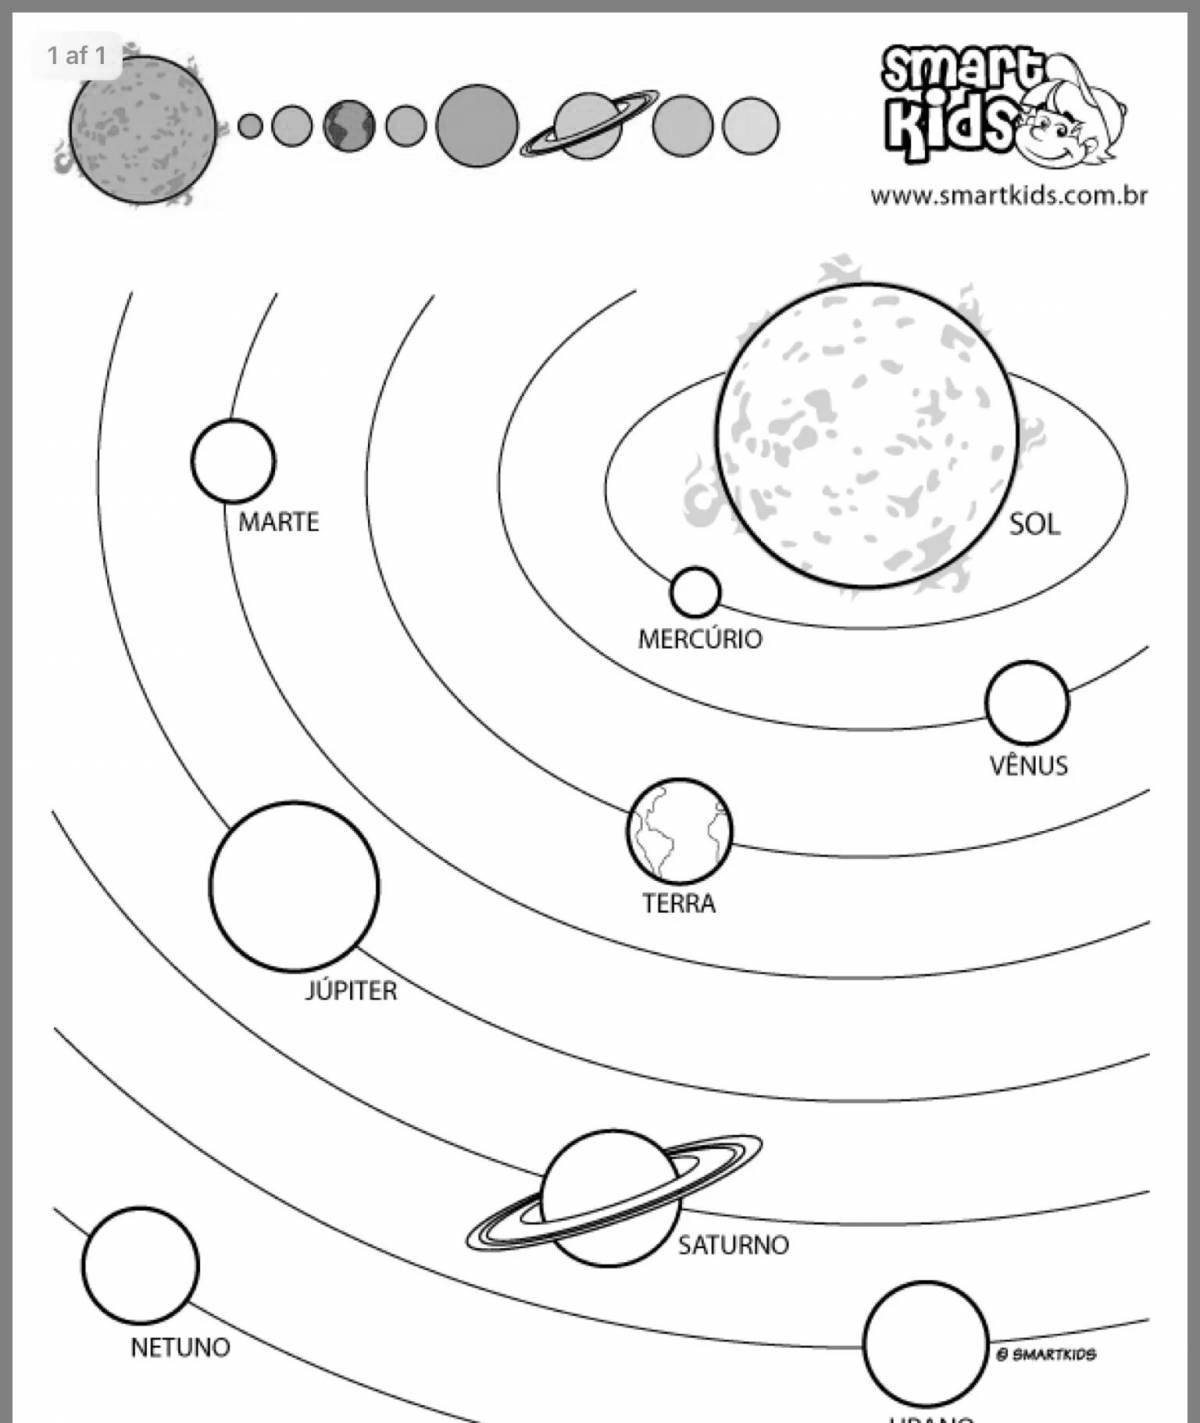 Интригующая раскраска планет солнечной системы в порядке от солнца с названиями